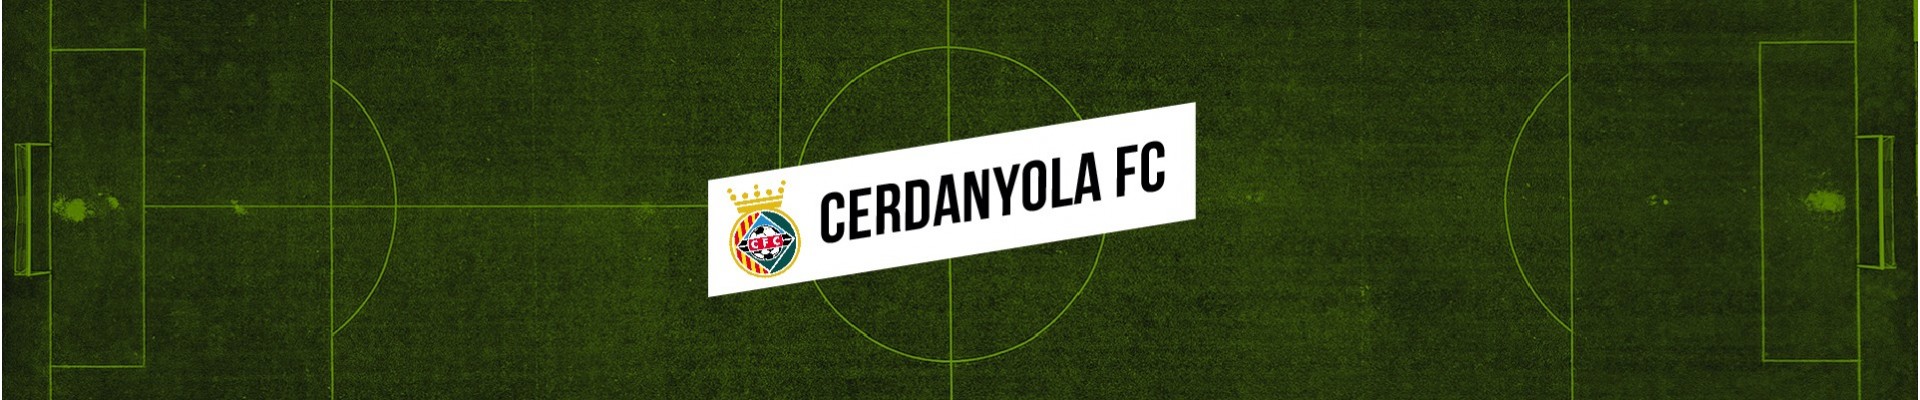 CERDANYOLA FC